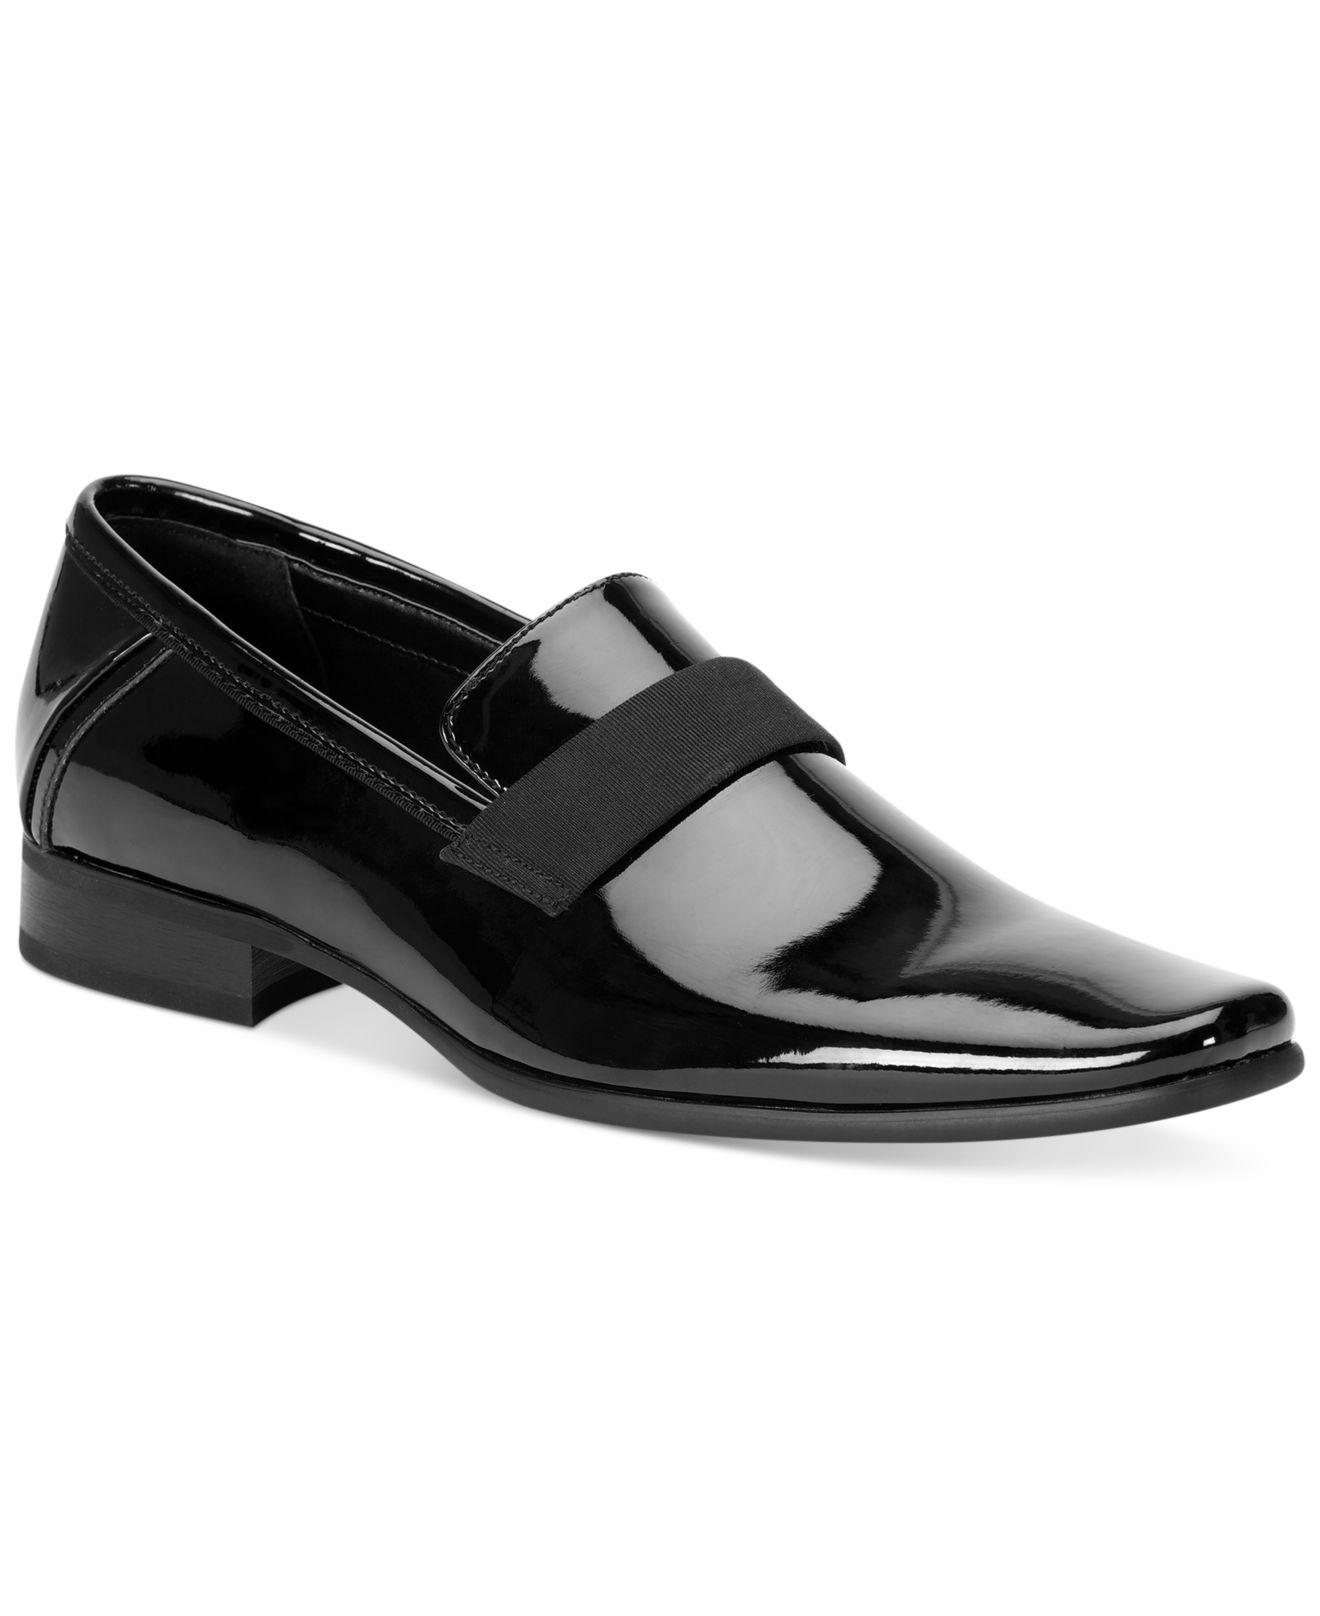 Calvin Klein Leather Bernard Tuxedo Dress Shoes in Black Patent 